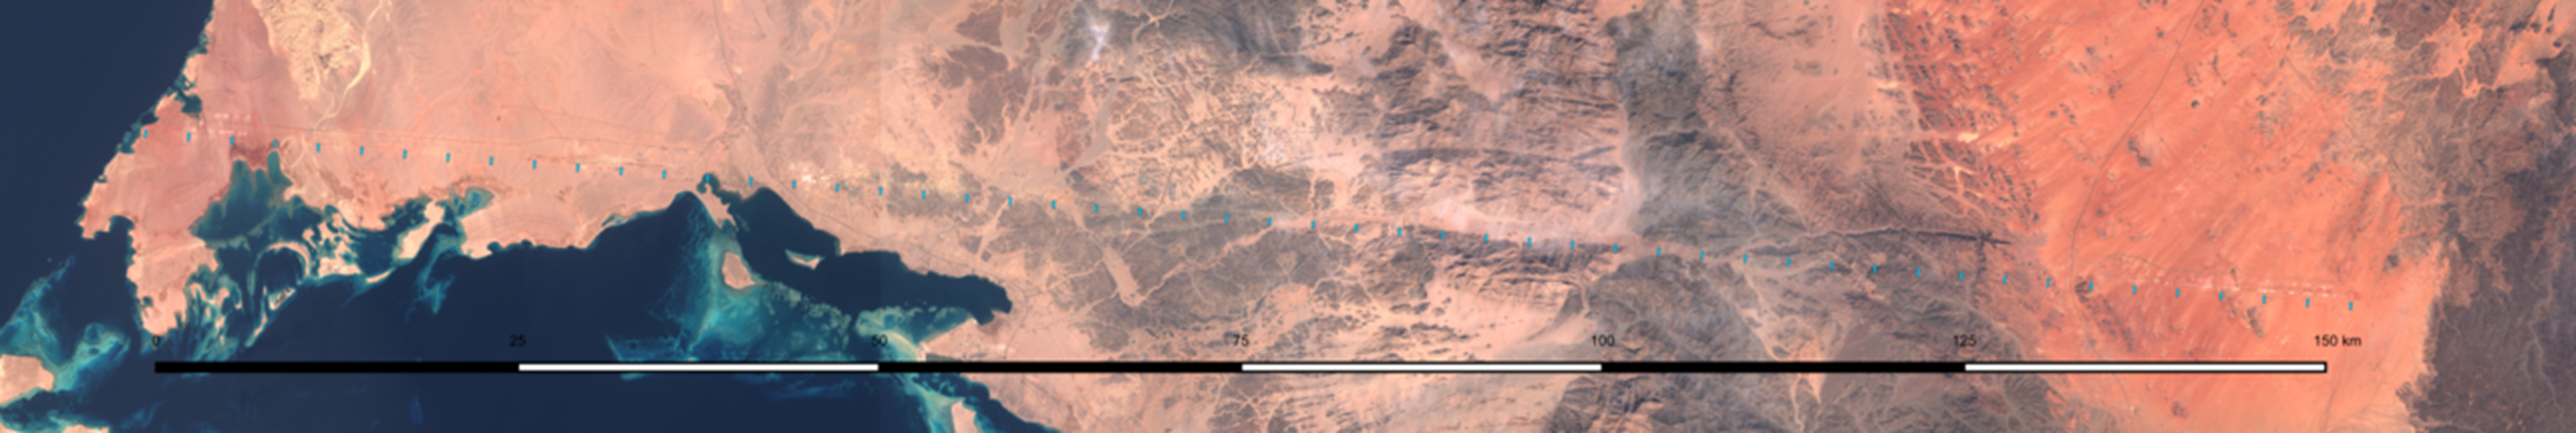 Private city: 150km path of Neom, Saudi Arabia (Picture: European Space Agency)